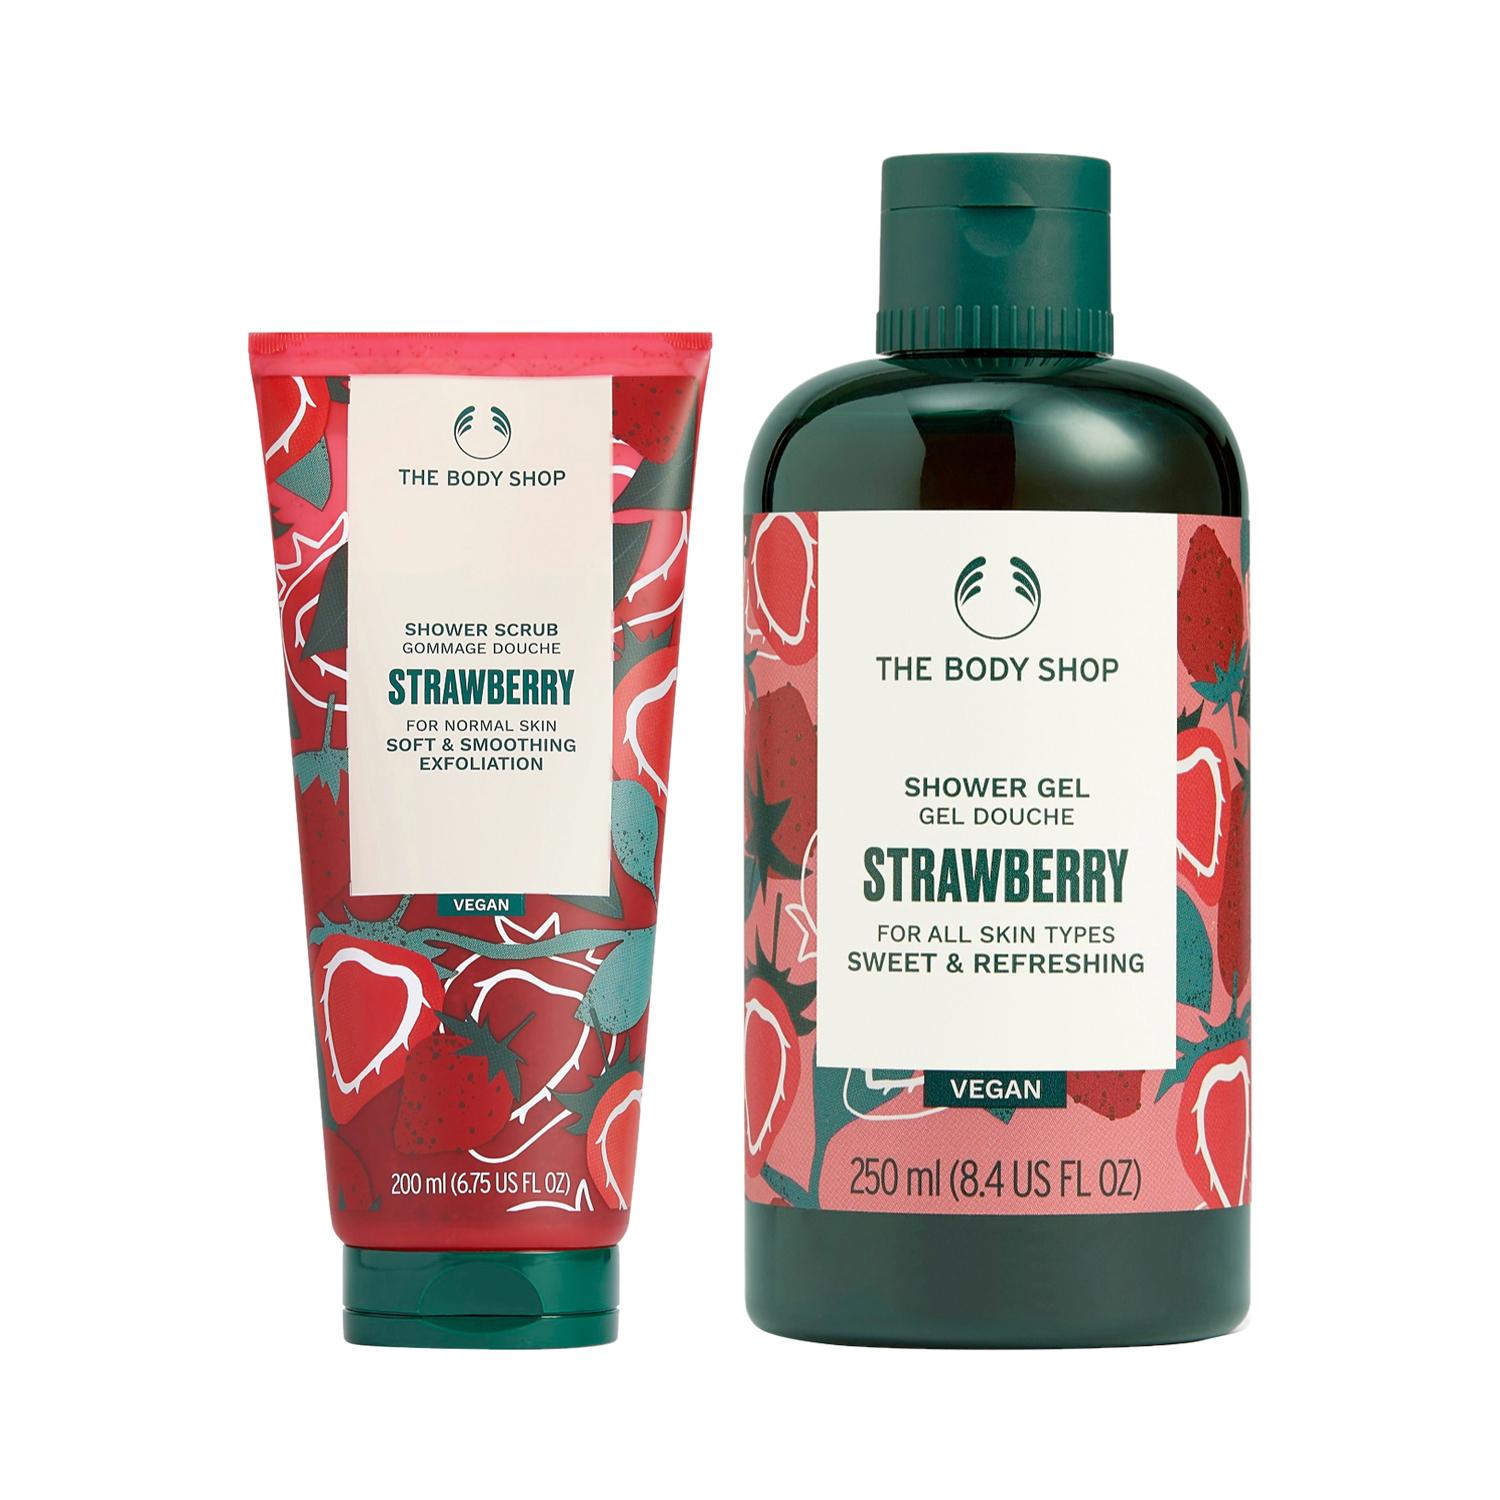 The Body Shop | The Body Shop Strawberry Shower Gel & Shower Scrub Combo